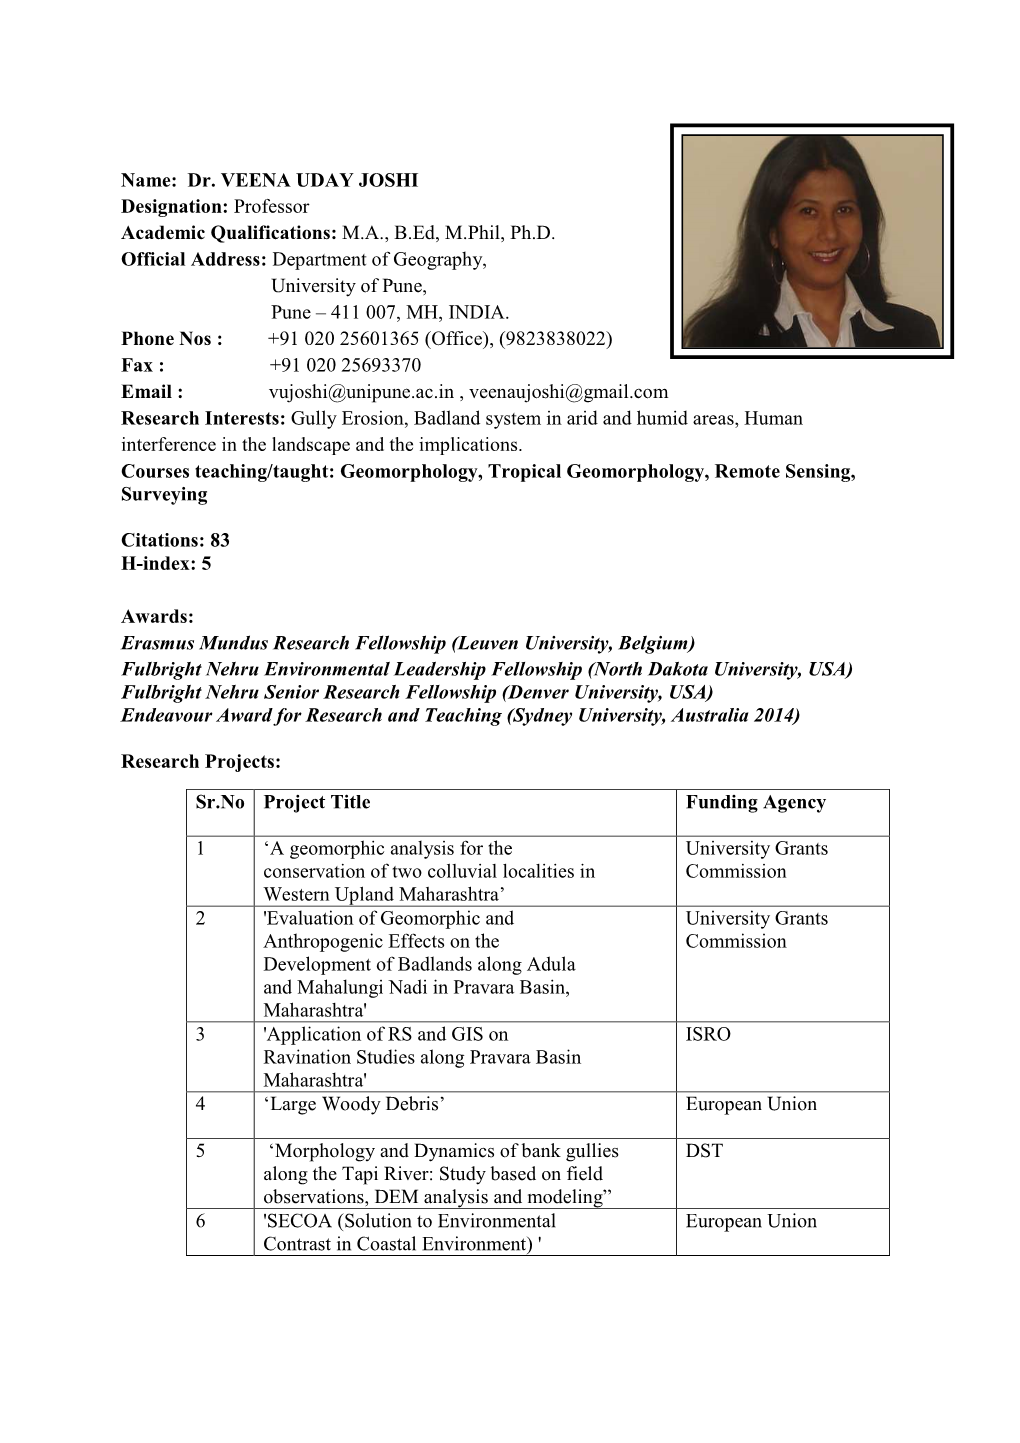 Name: Dr. VEENA UDAY JOSHI Designation: Professor Academic Qualifications: M.A., B.Ed, M.Phil, Ph.D